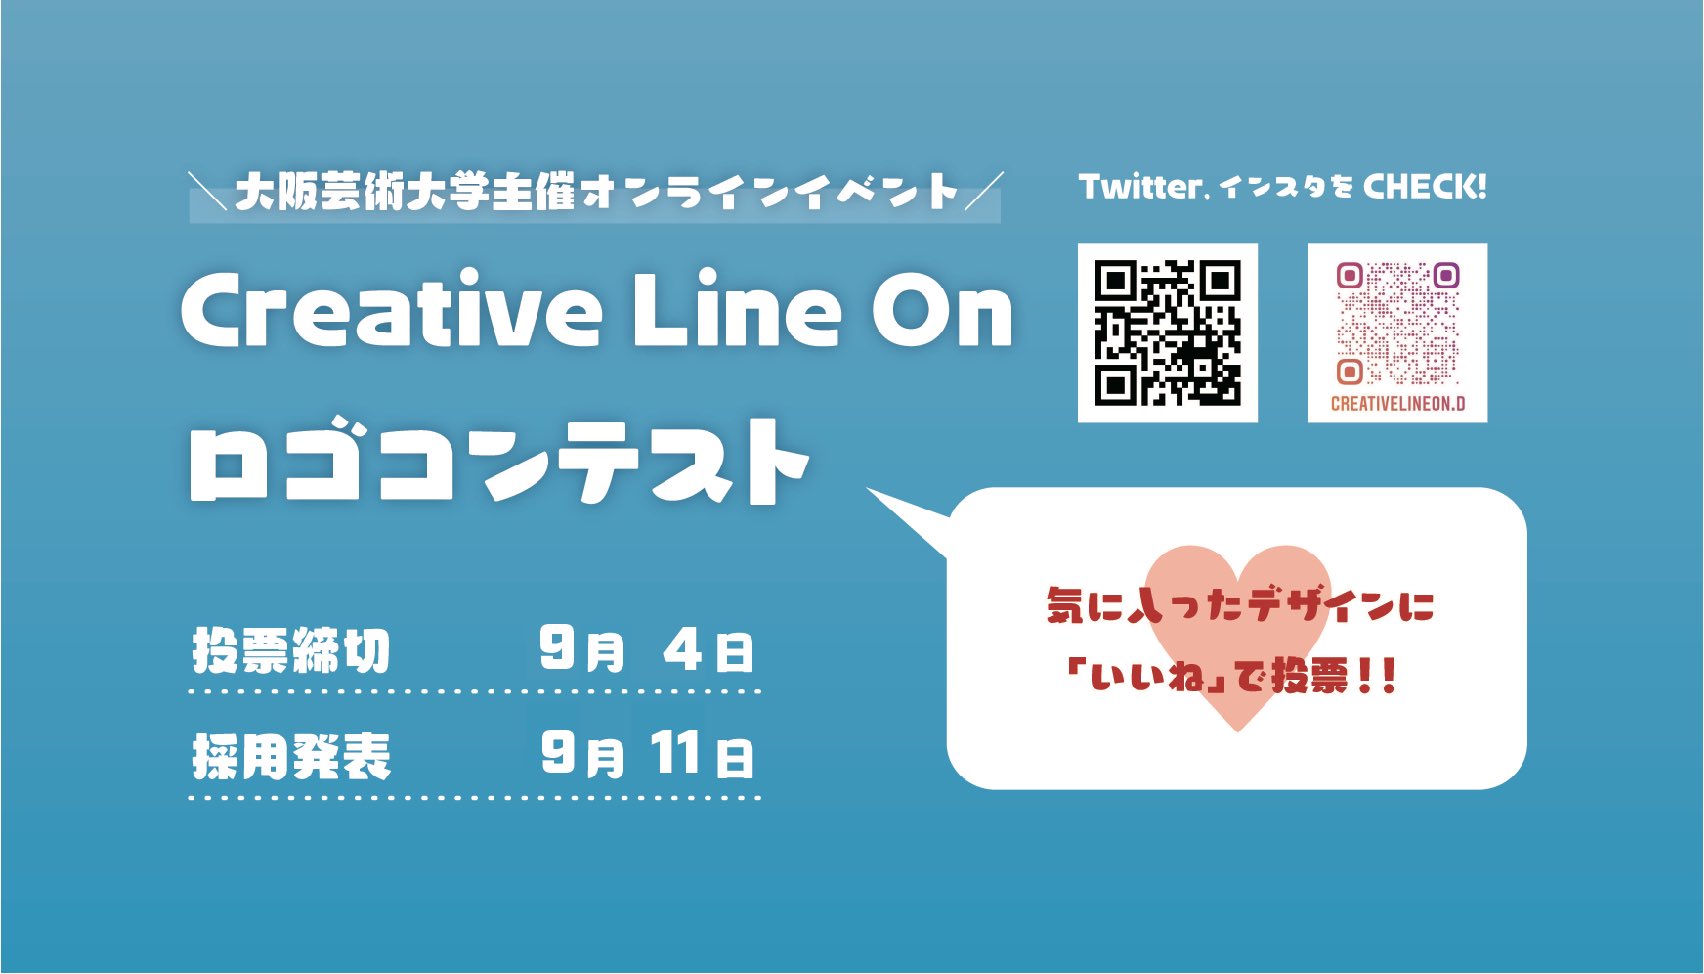 Creative Line On D Clo Dteam Twitter